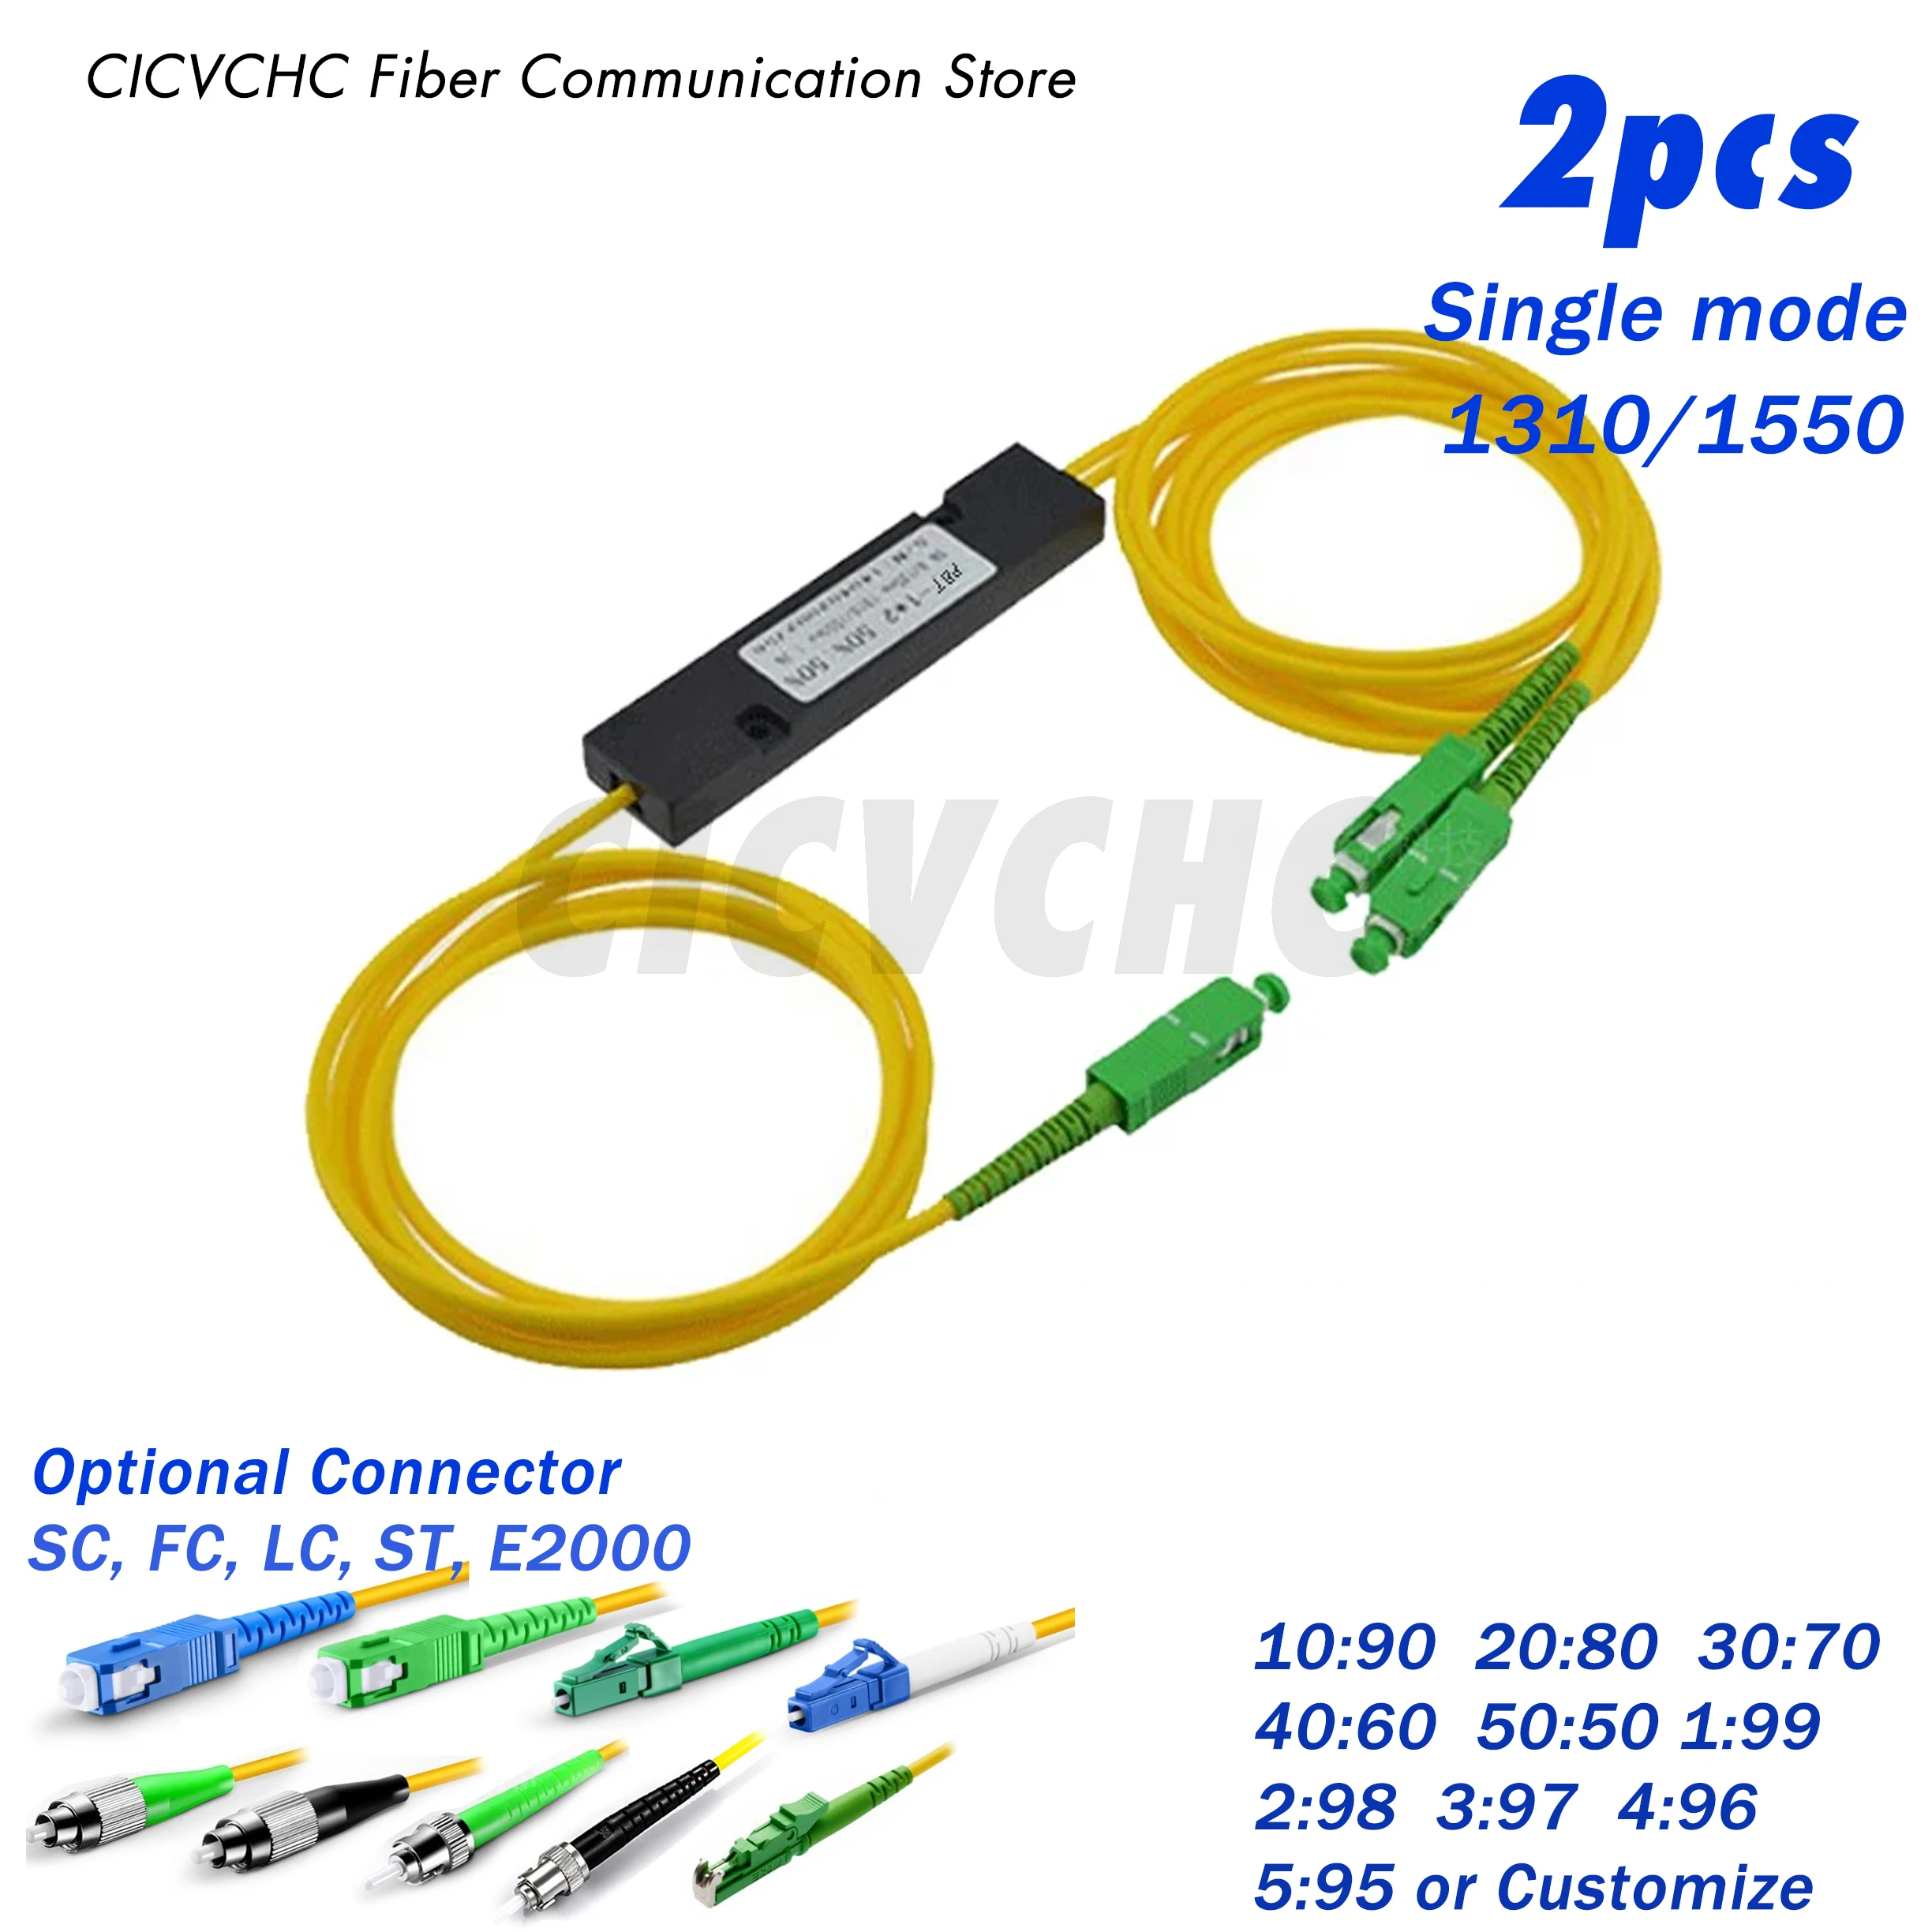 2pcs 1X2 FBT Coupler, Single mode 1310/1550nm, ABS 3.0mm Loose Tube, -SC, FC, LC - 0.5m/Optical Fiber Coupler